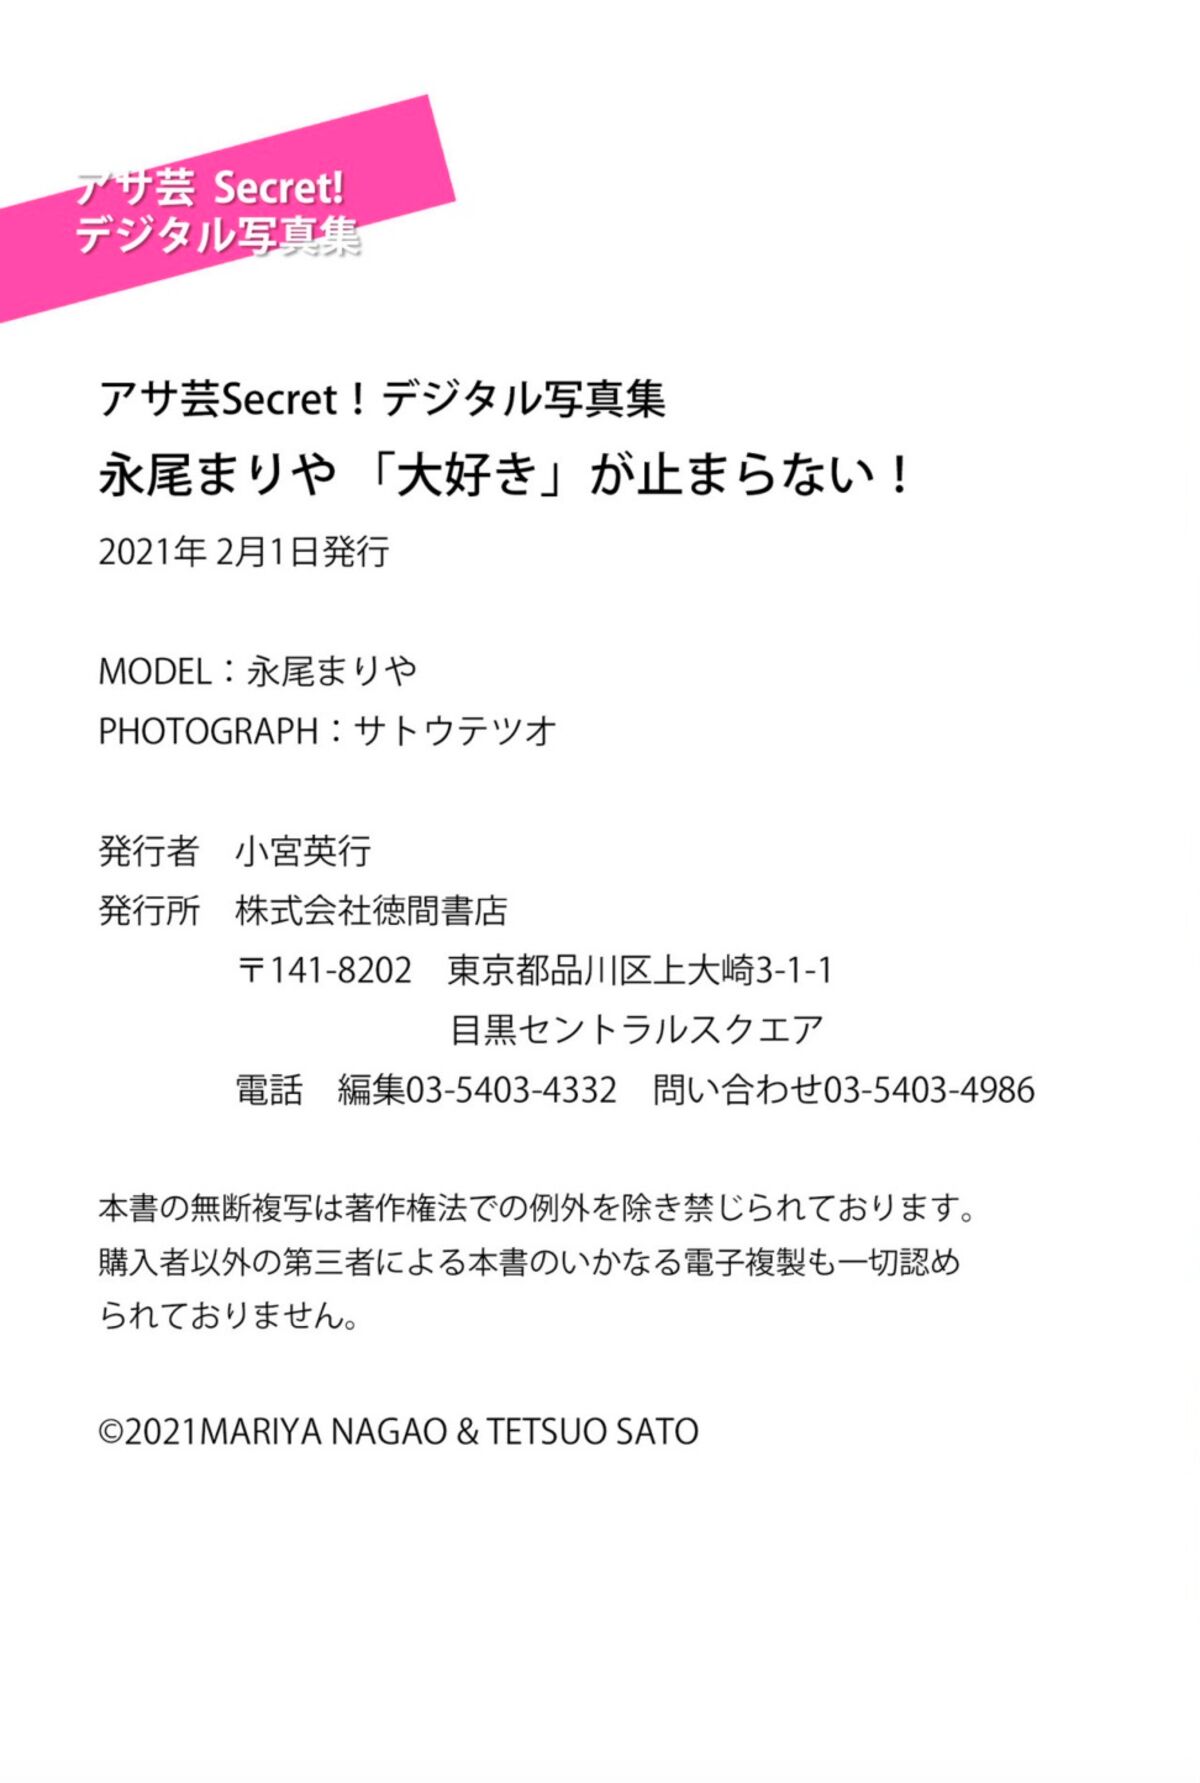 Asa Gei Secret Digital Photo Book Mariya Nagao I Love You So Much 0061 1118138383.jpg